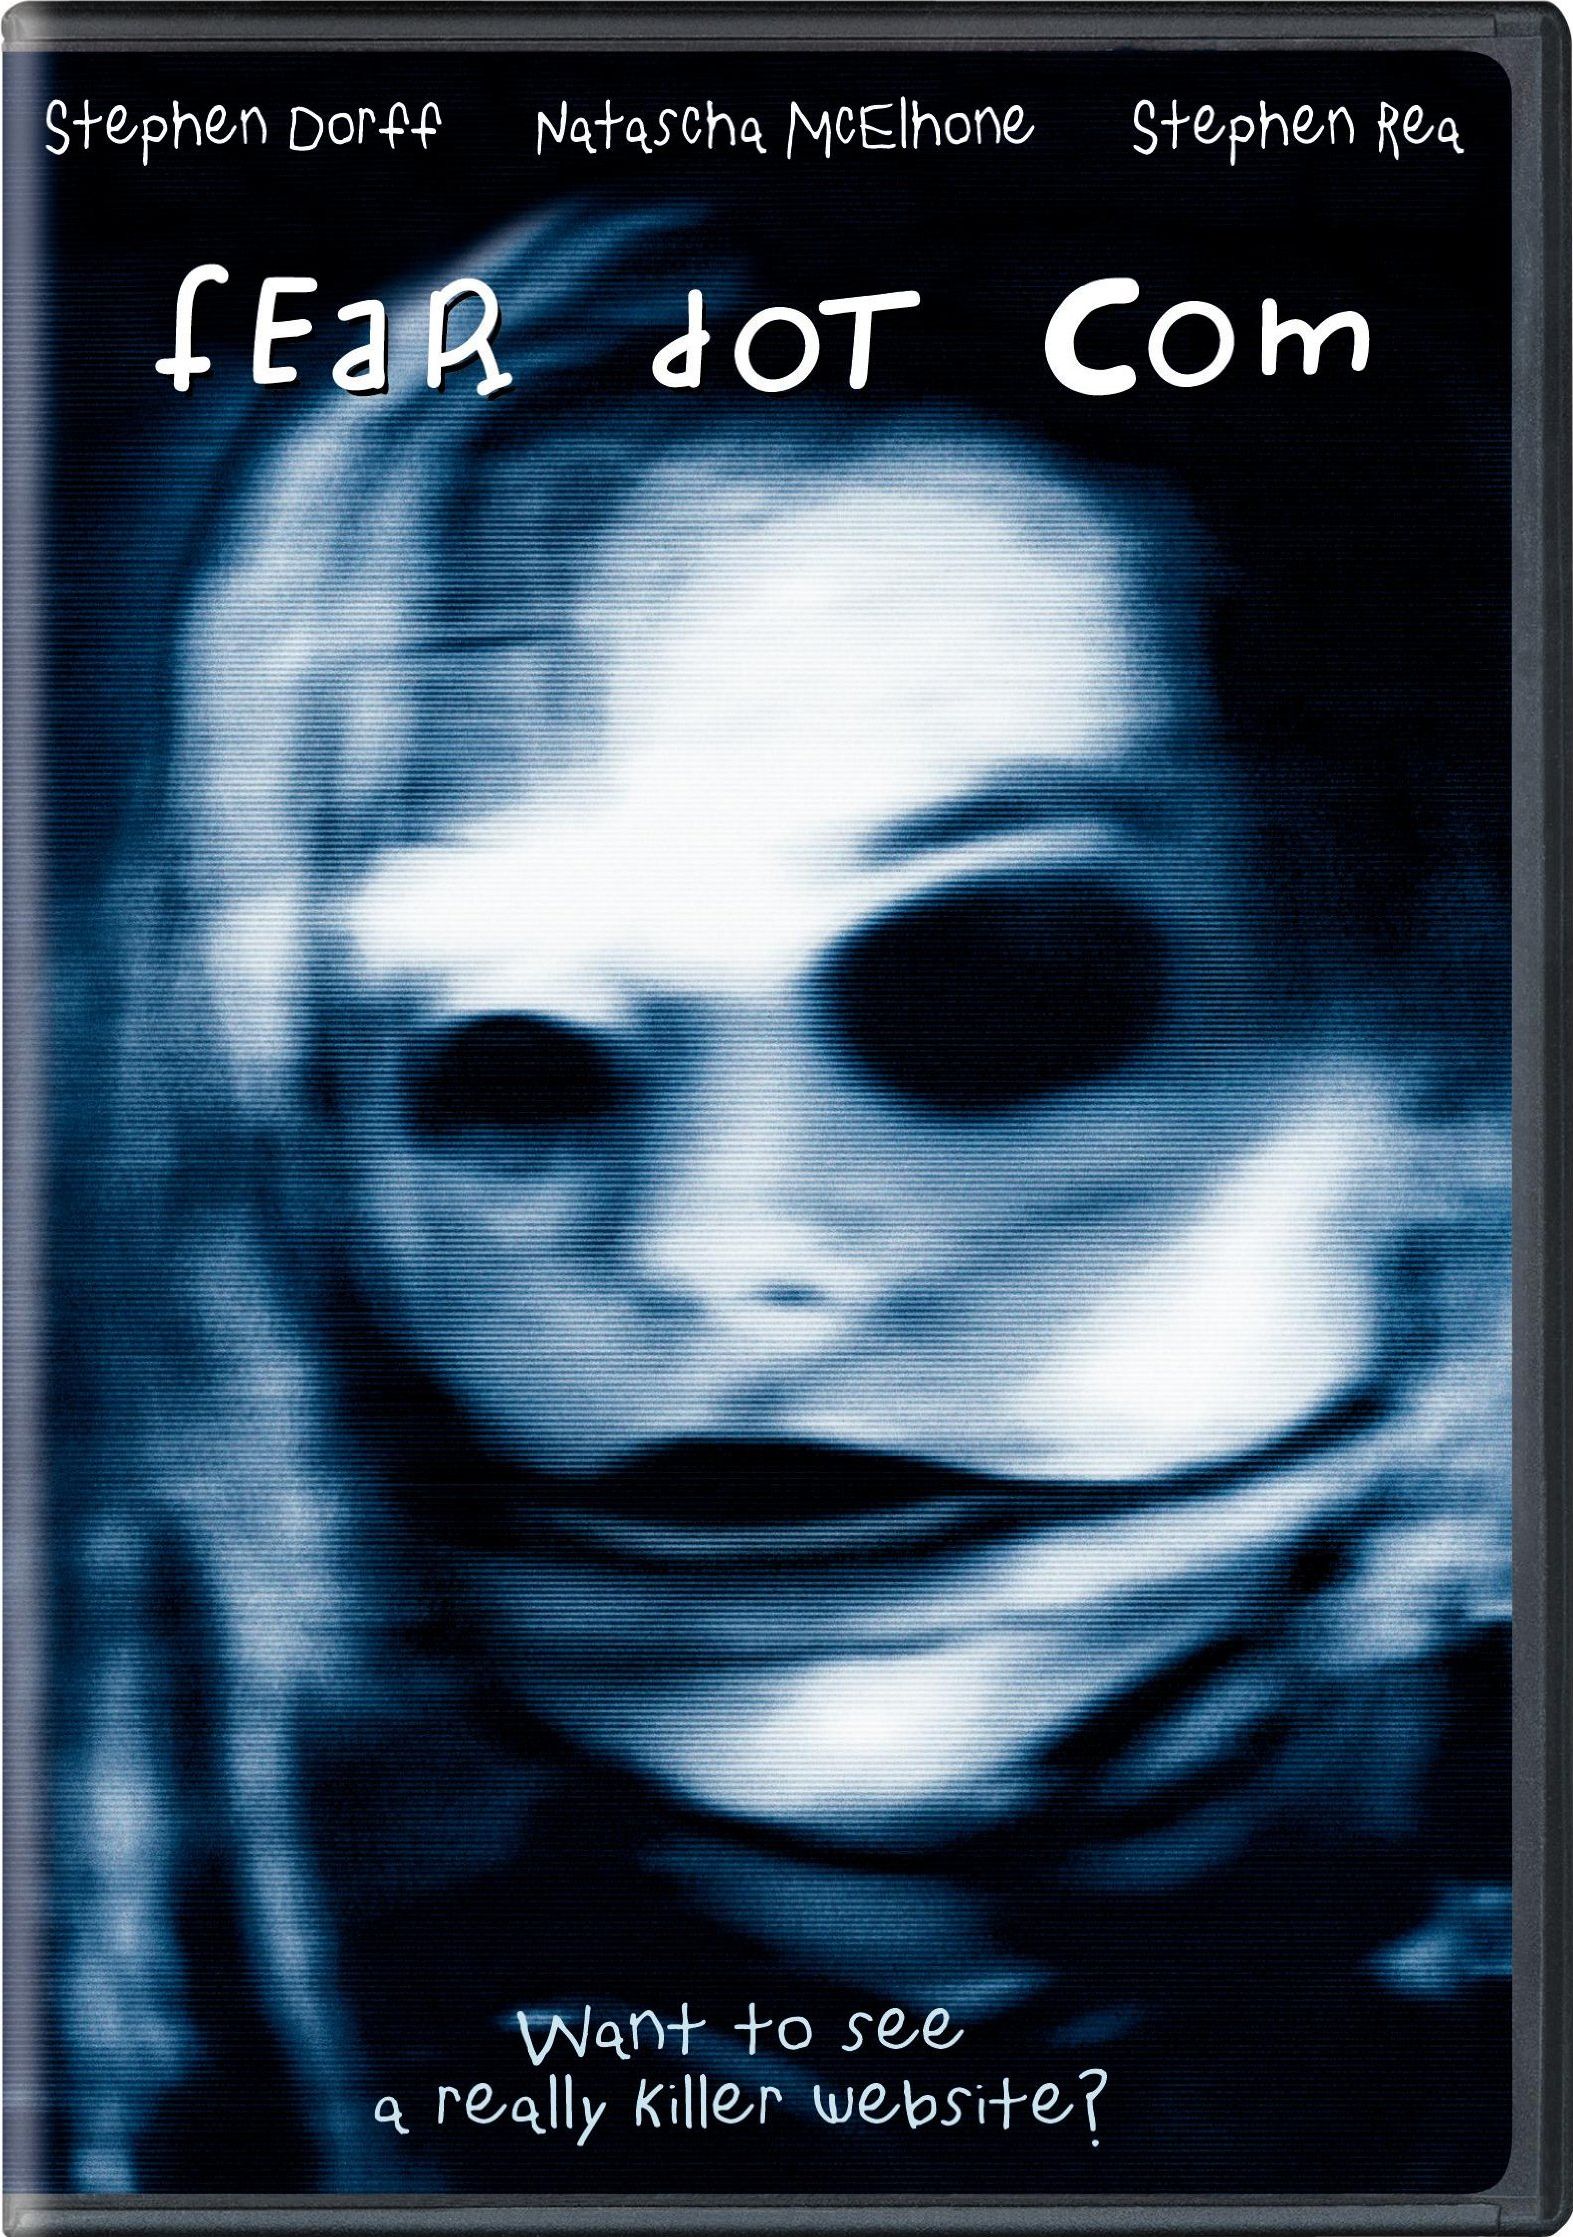 FeardotCom DVD Release Date January 14, 20031573 x 2237